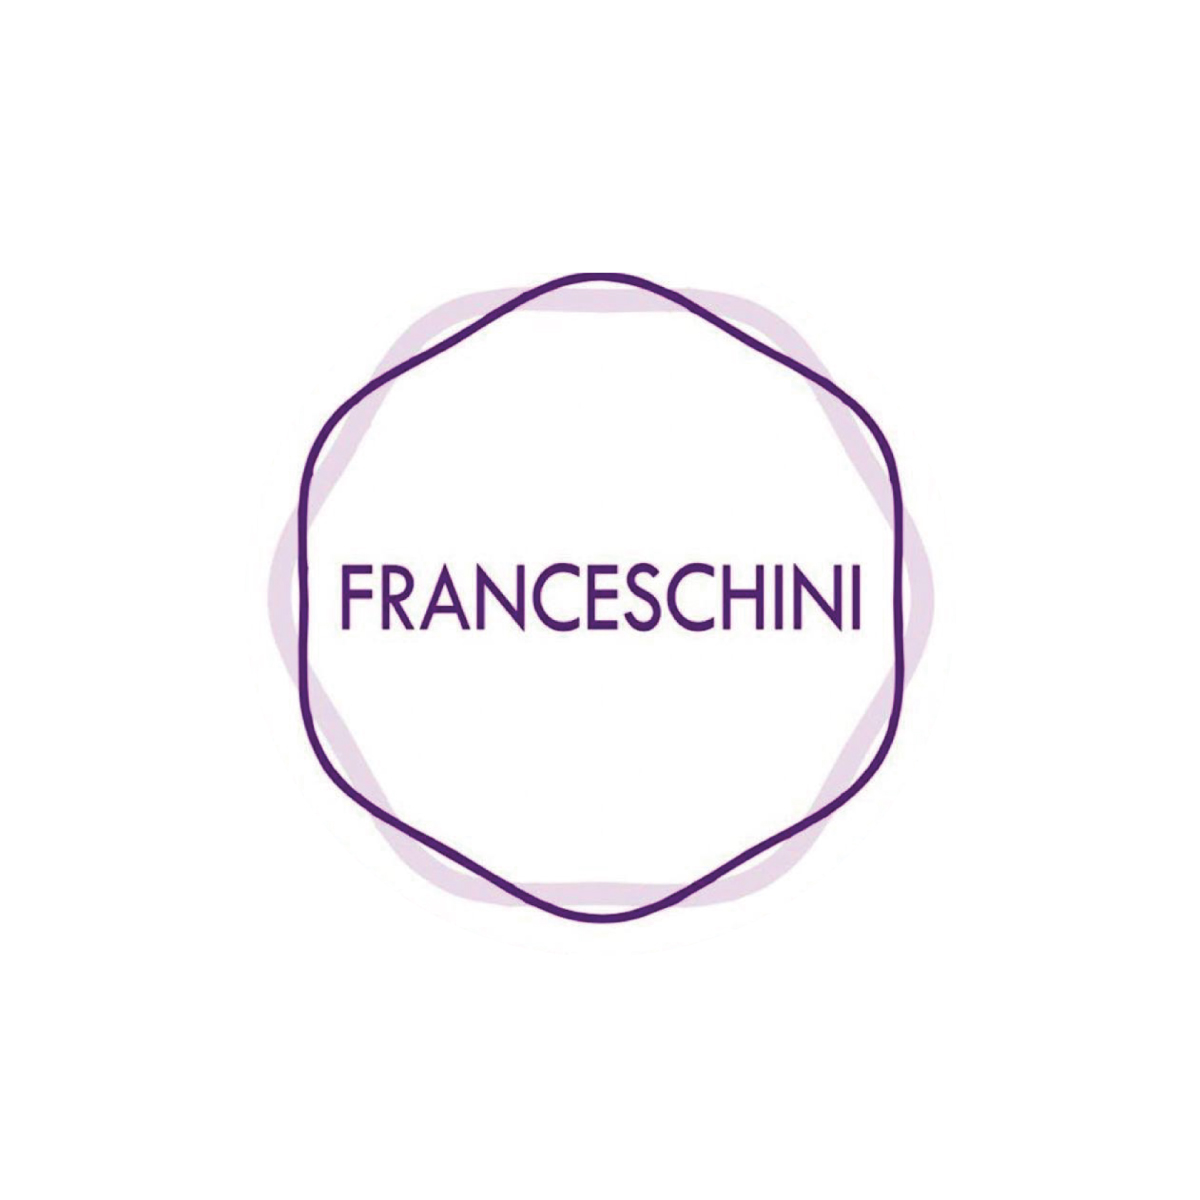 Francheschini